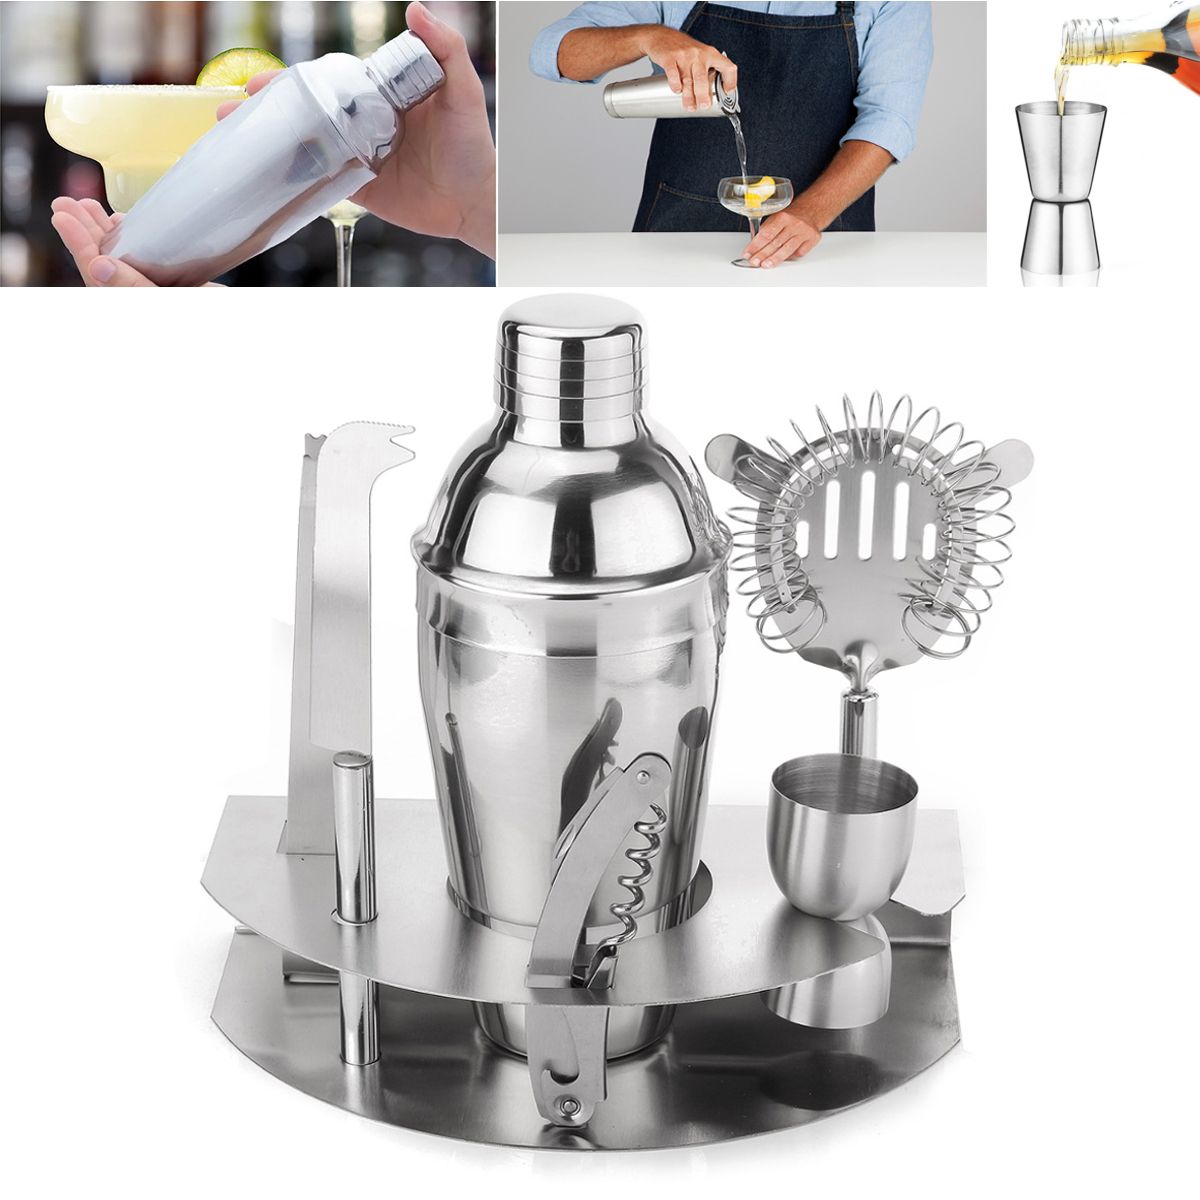 7Pcs-550mL-Stainless-Steel-Cocktail-Shaker-Mixer-Drink-Bartender-Bar-Tools-Maker-Set-Kit-1366163